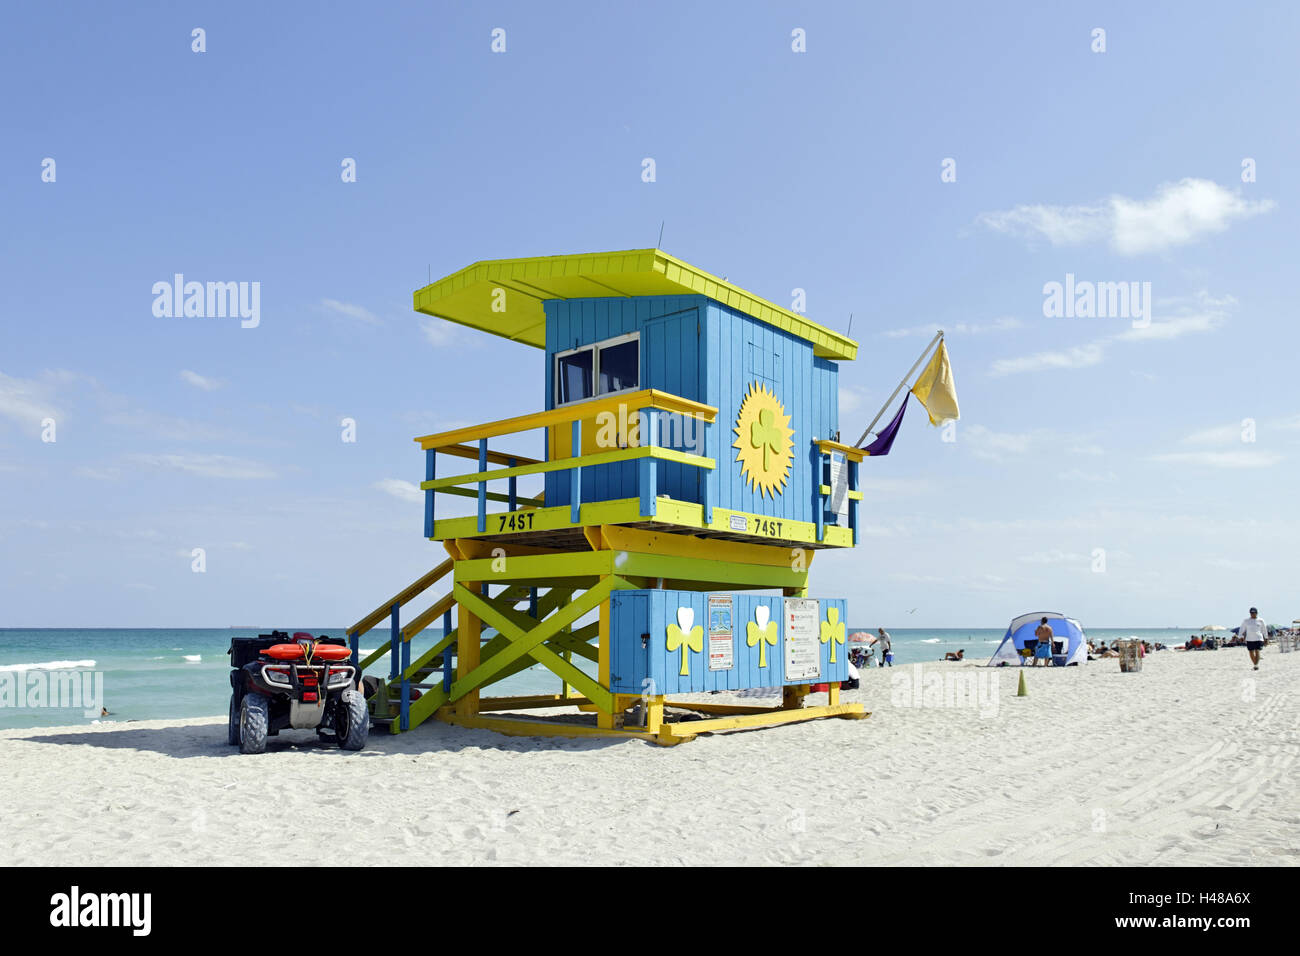 Beach lifeguard tower '74 ST', Atlantic Ocean, Miami South Beach, Florida, USA, Stock Photo